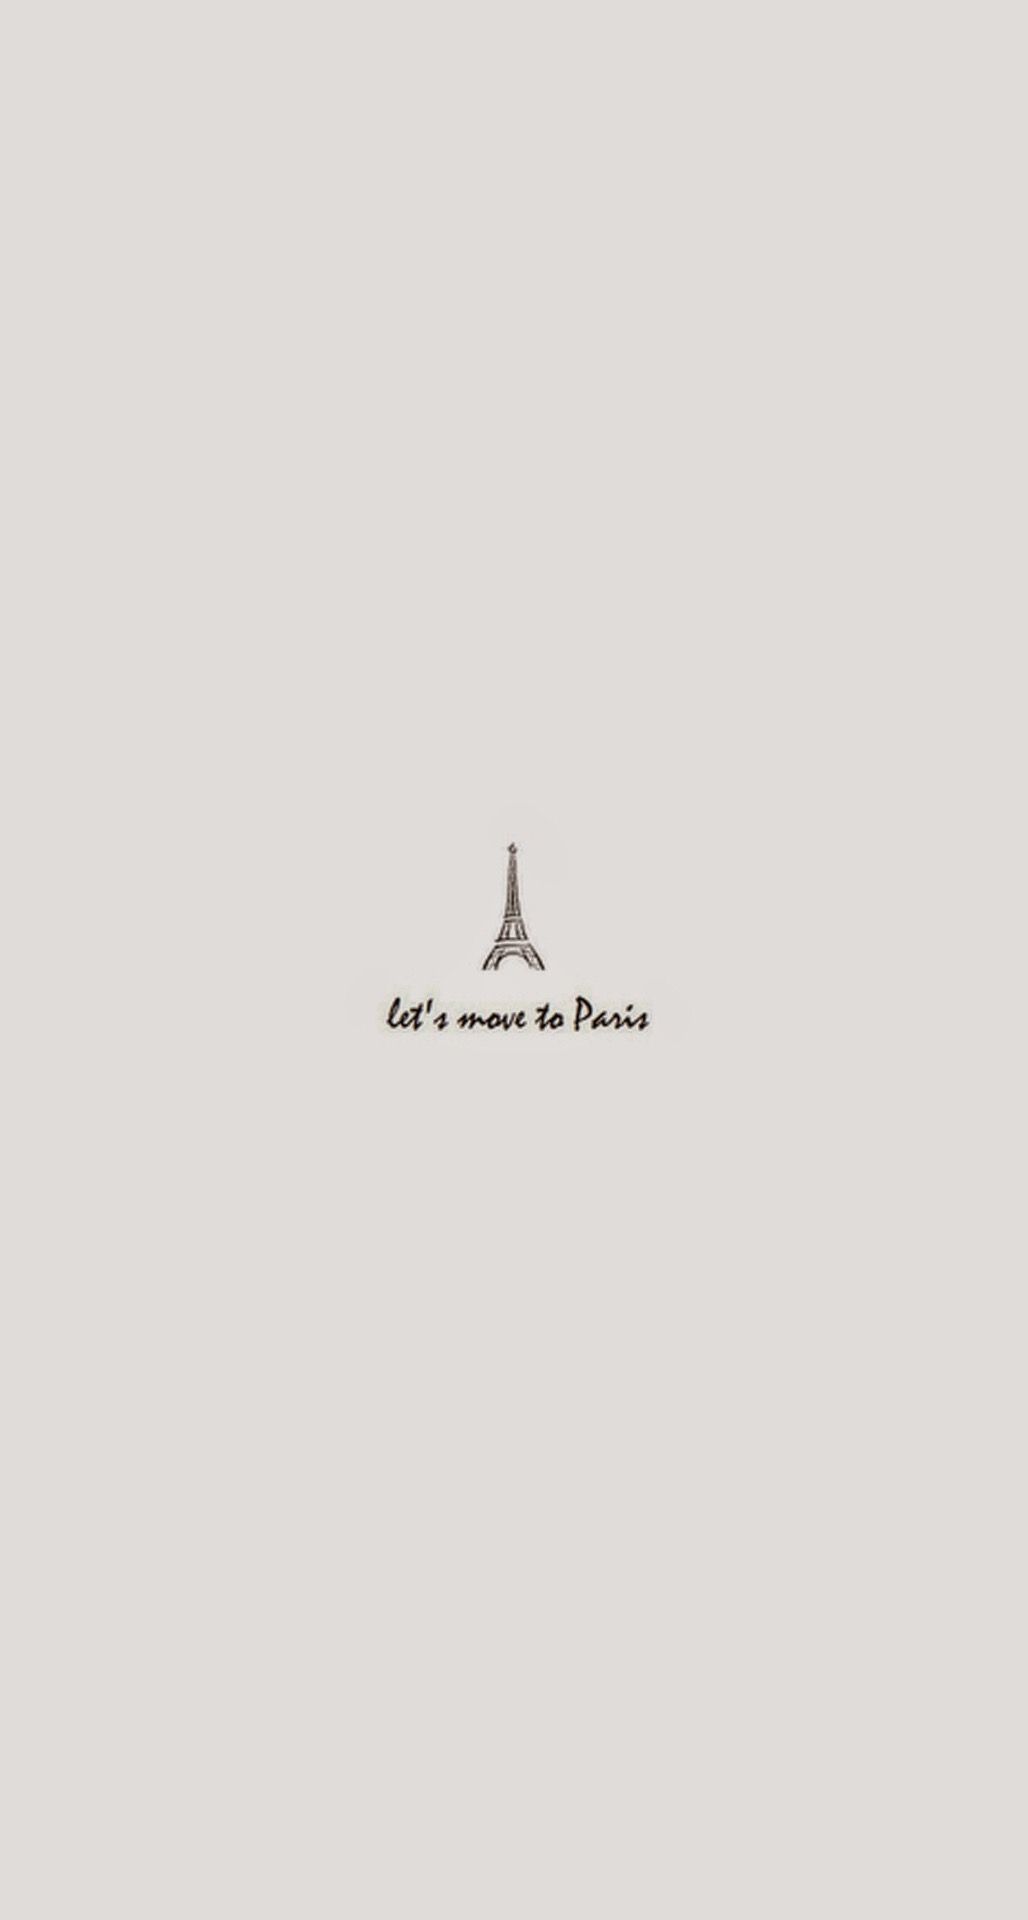 Move To Paris Minimal iPhone 6 Plus HD Wallpaper HD